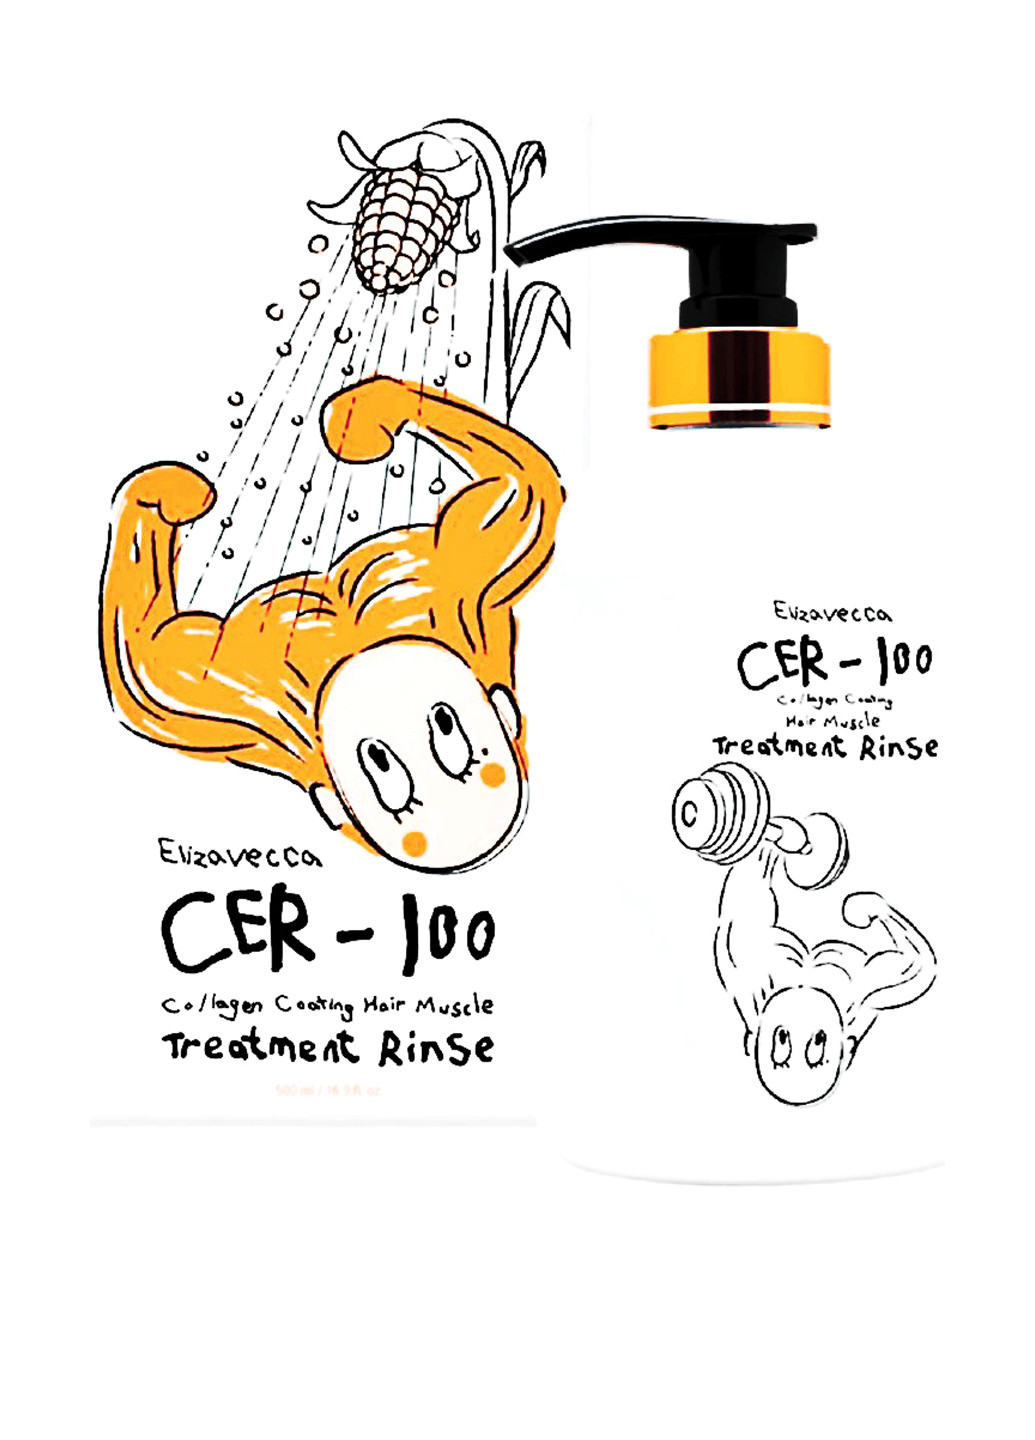 Бальзам-ополаскиватель CER-100 Collagen Coating Hair Muscle Treatment Rinse, 500 мл Elizavecca (197277367)